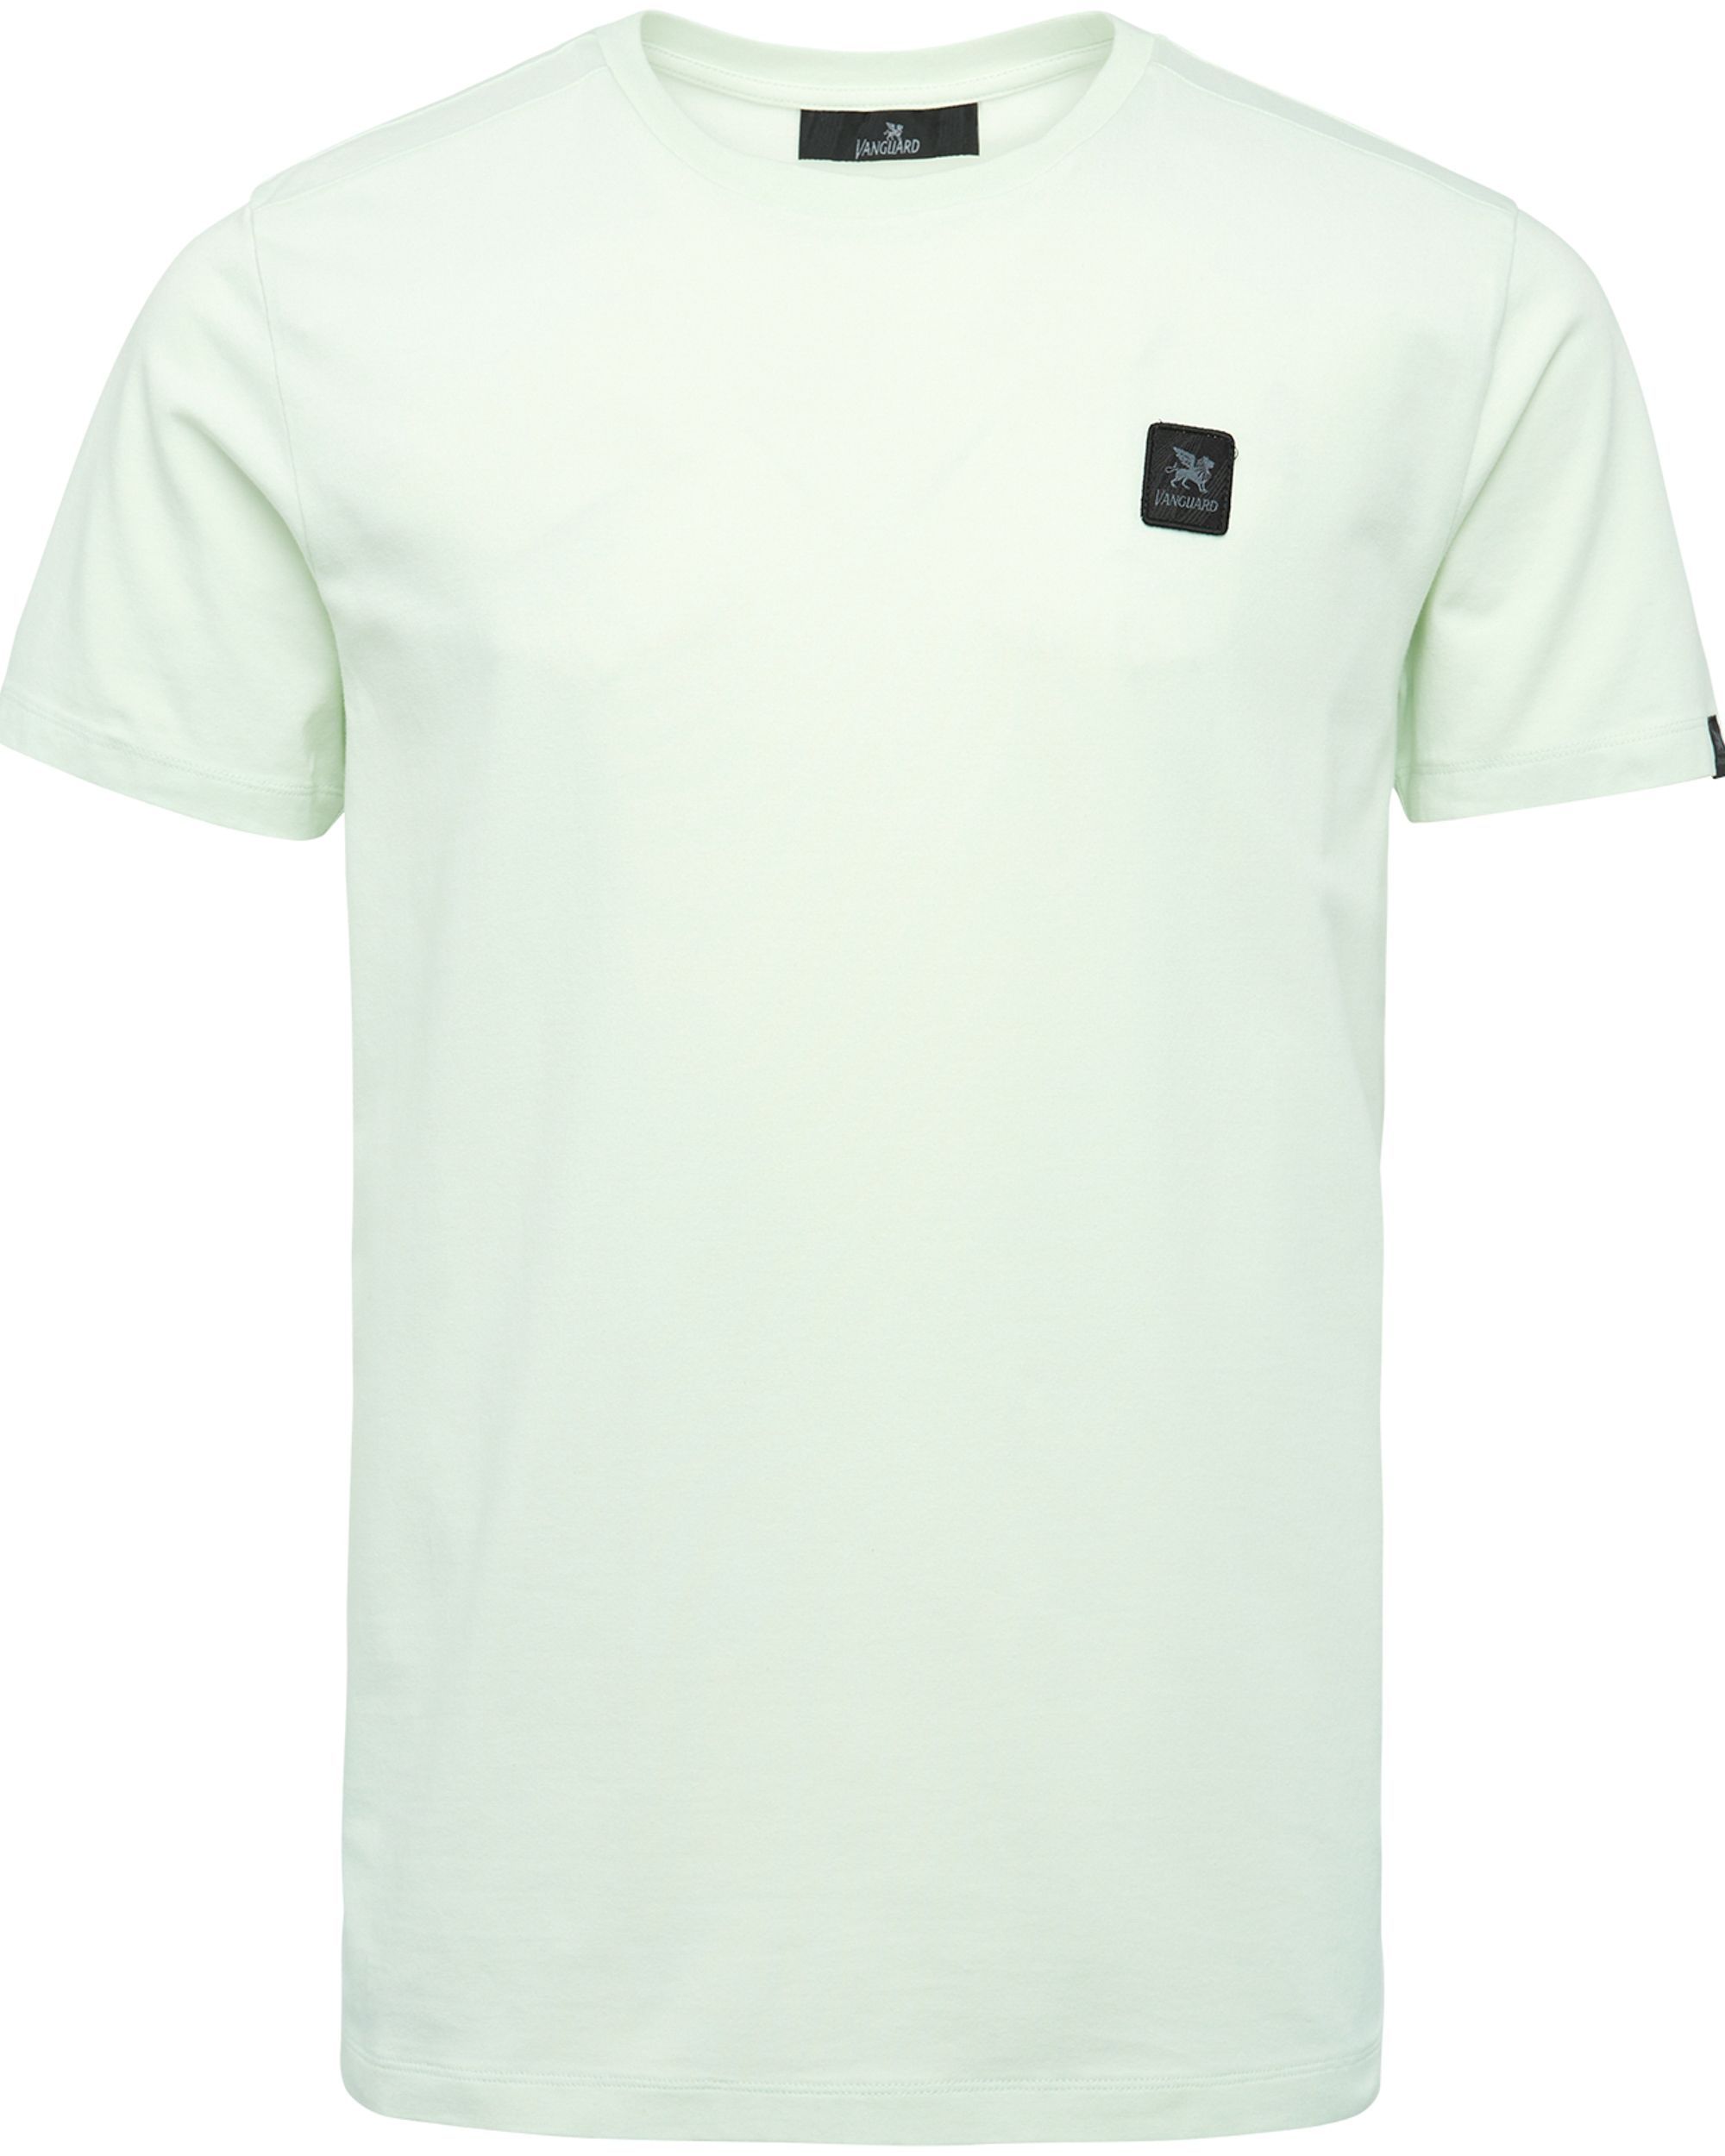 Vanguard T-shirt KM Groen 080085-001-L